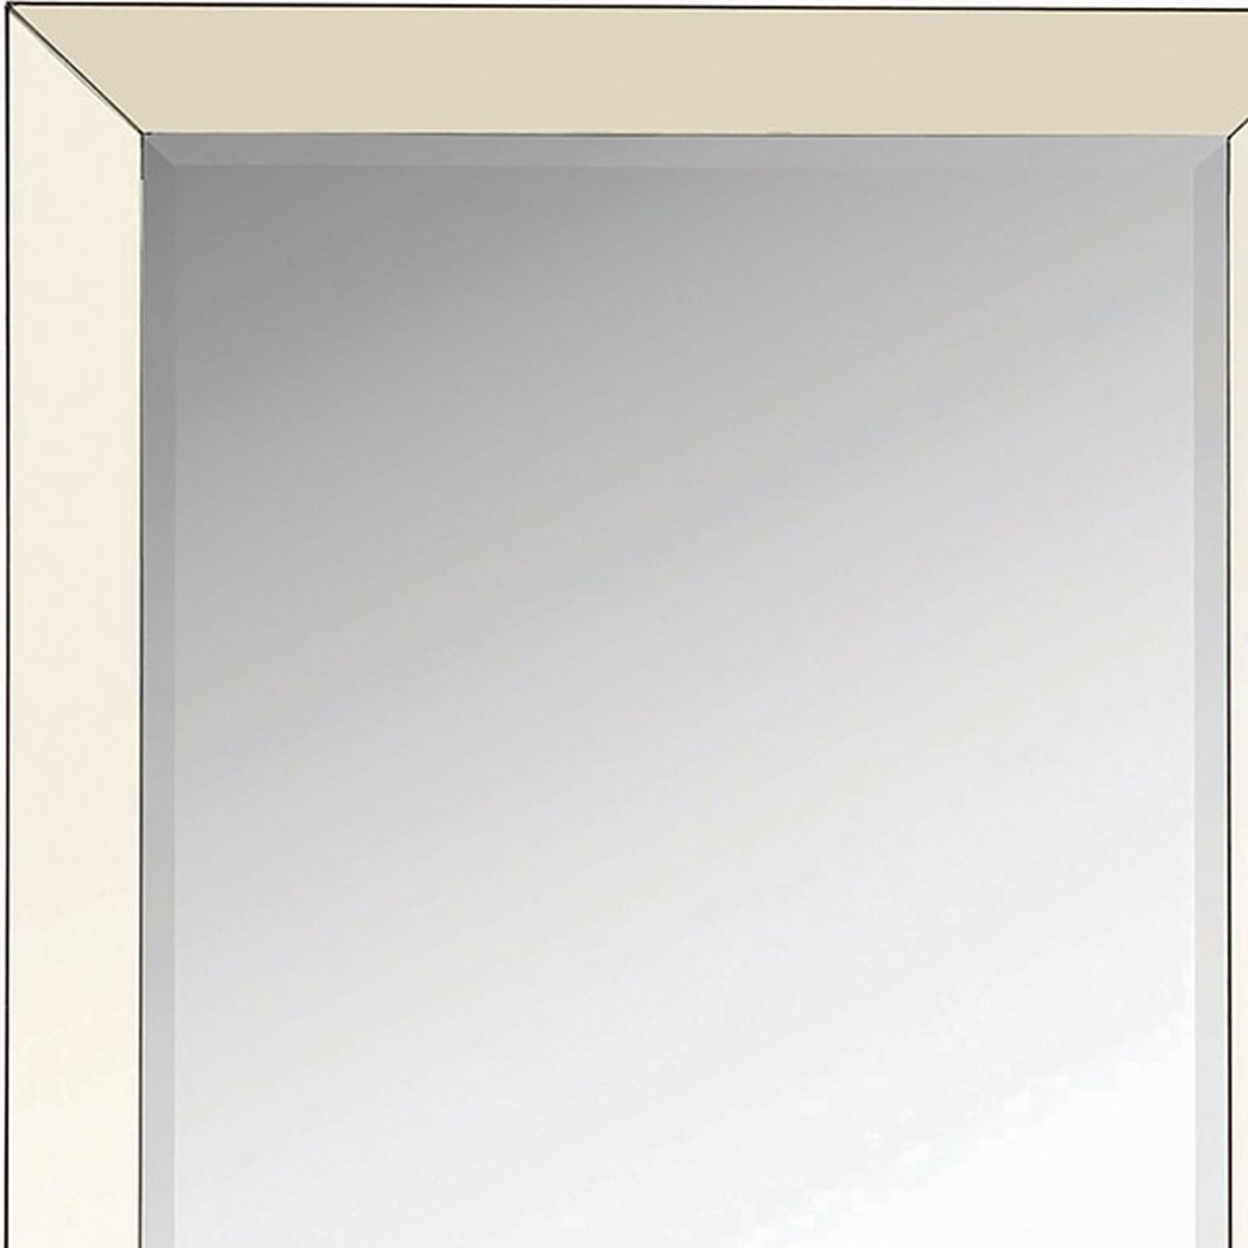 Rectangular Shaped Floor Mirror With Beveled Edge, Silver- Saltoro Sherpi